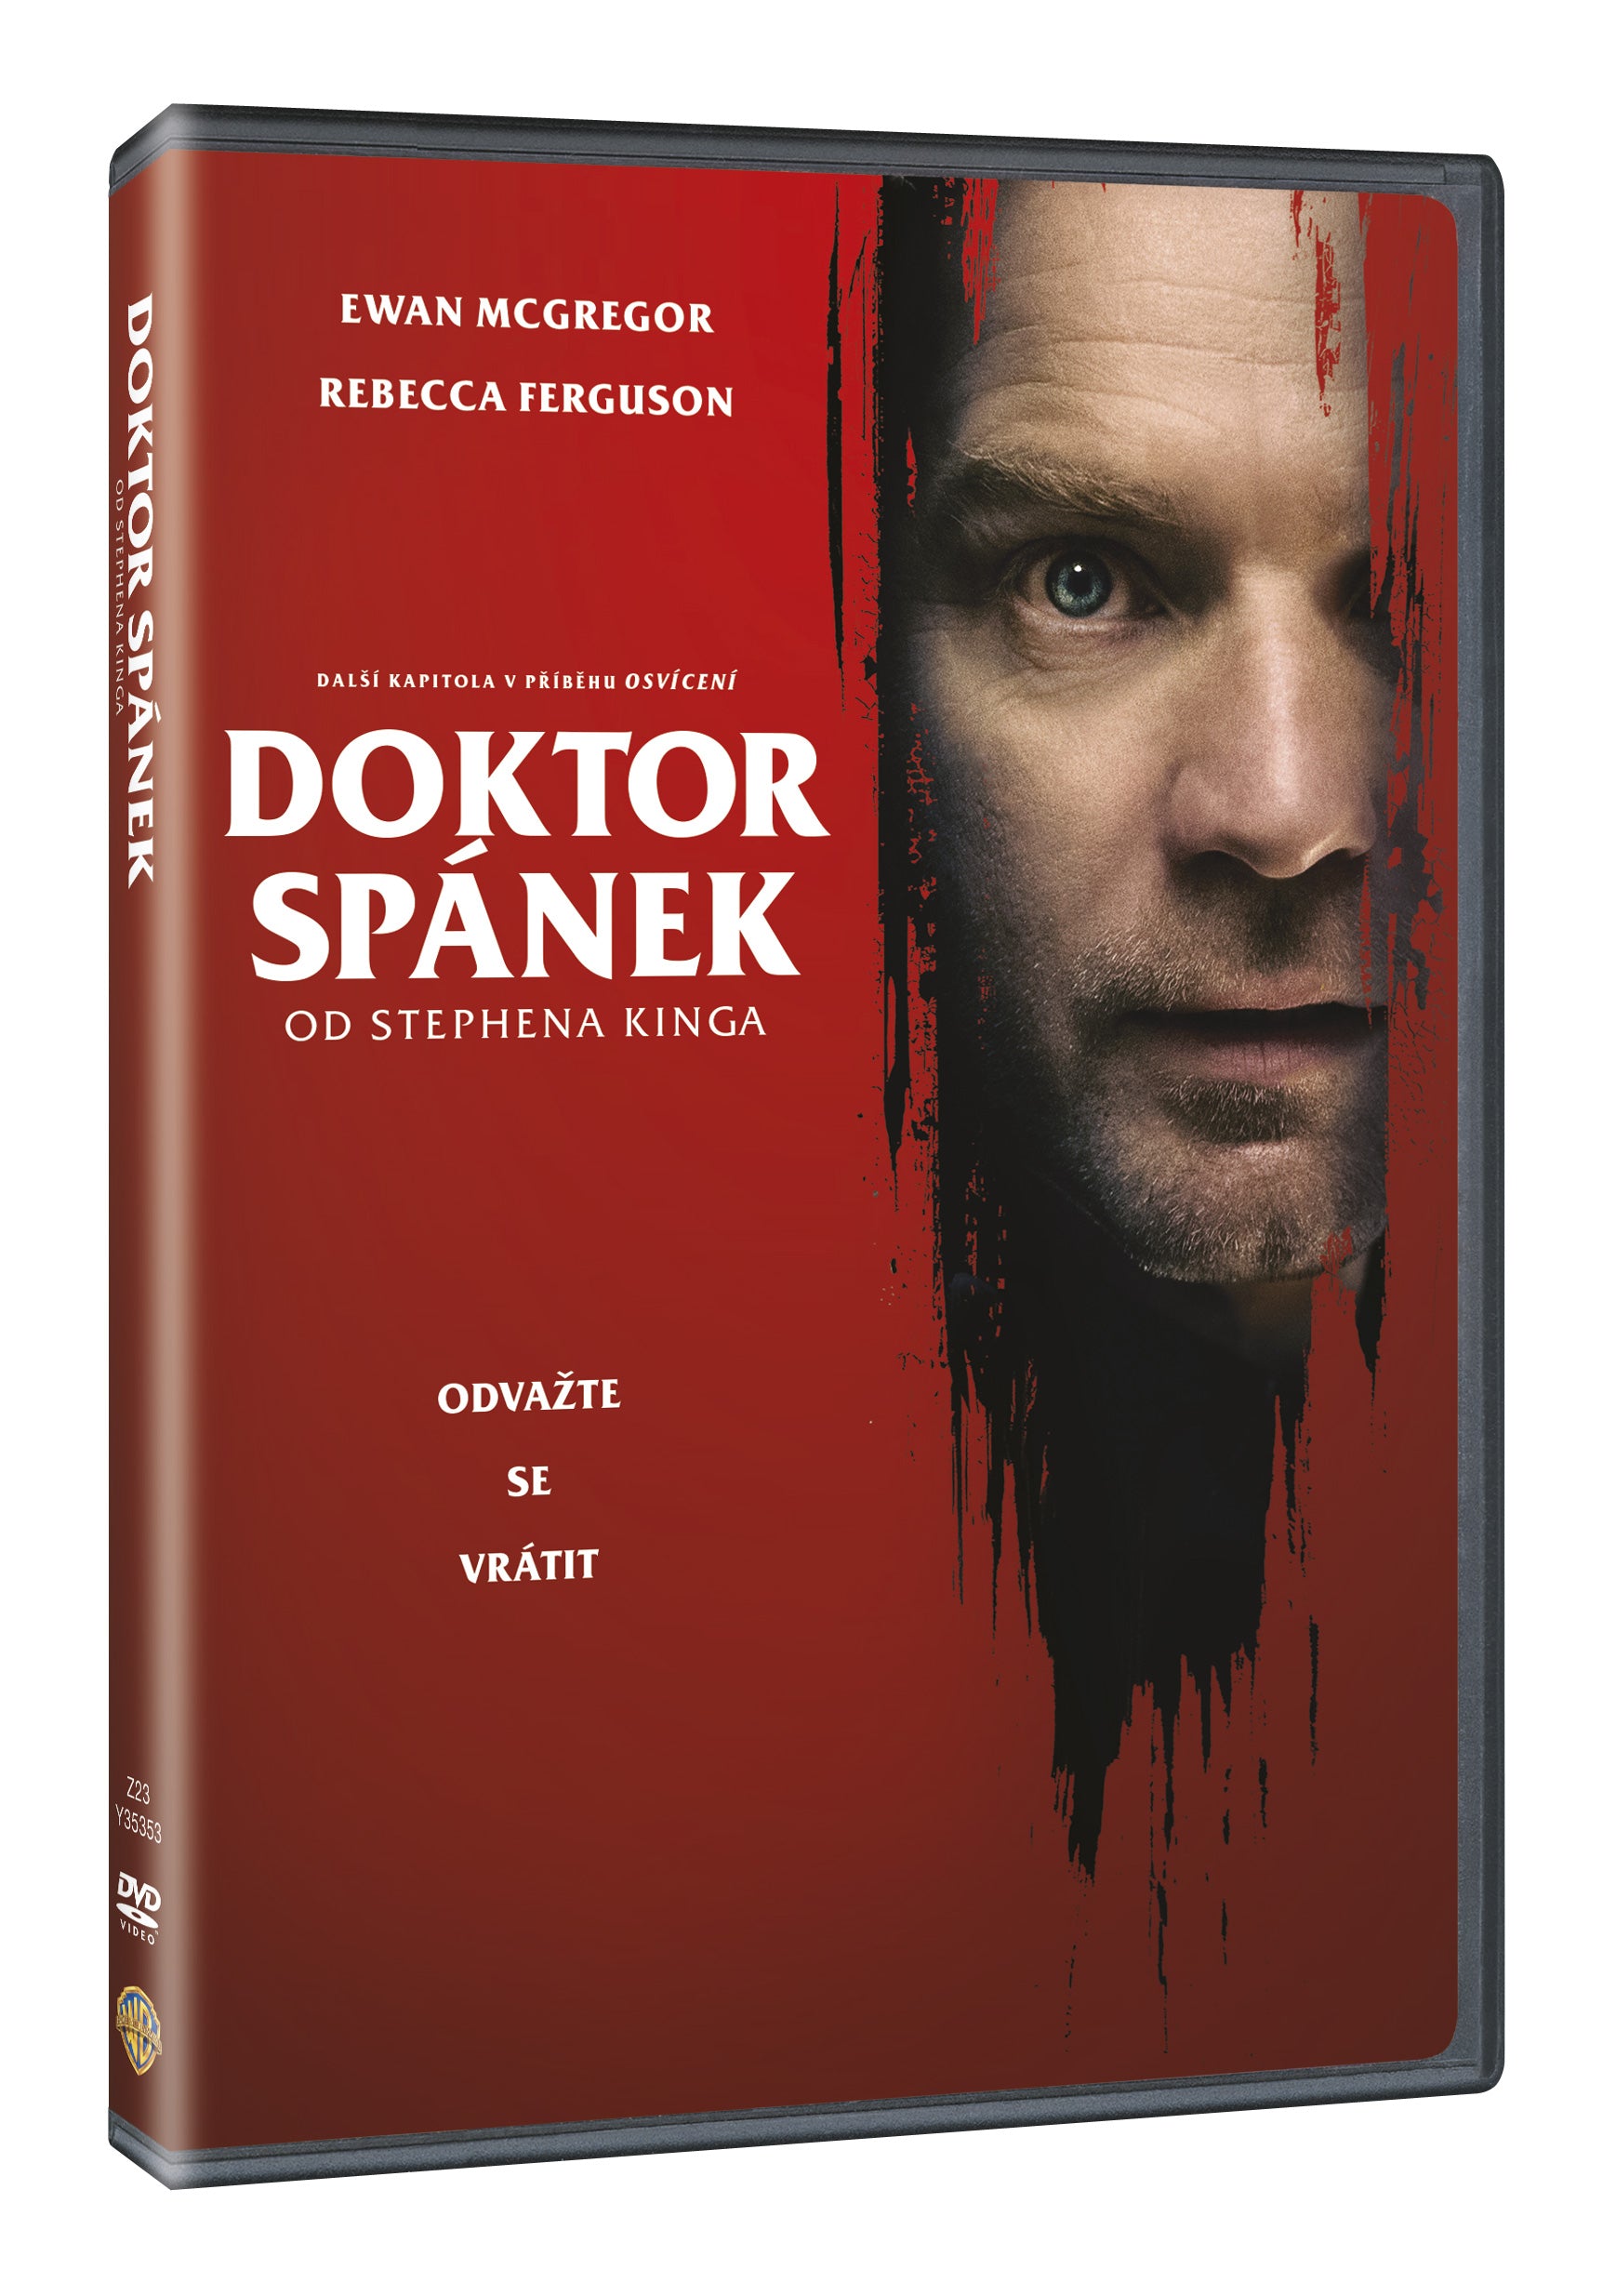 DVD „Doktor Spanek“ von Stephena Kinga / Doctor Sleep